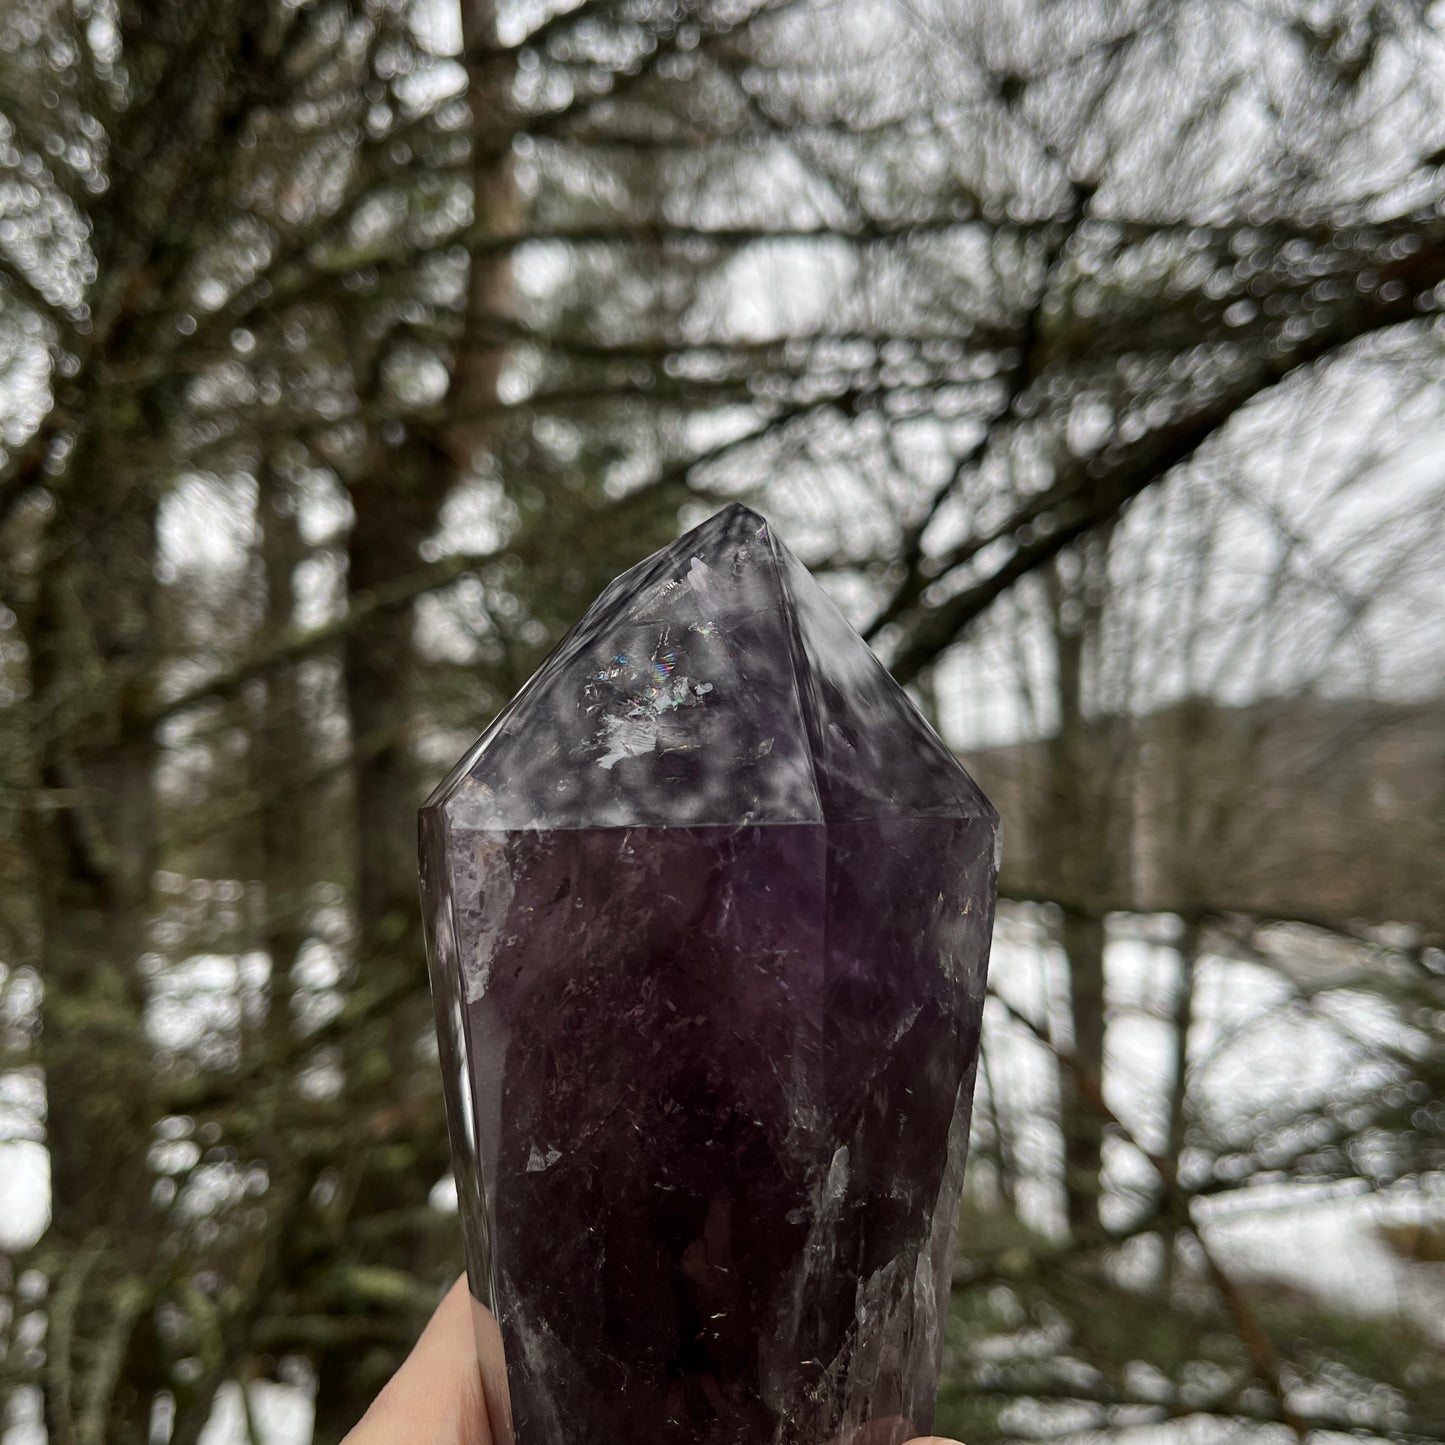 Purple Amethyst Crystal Tower